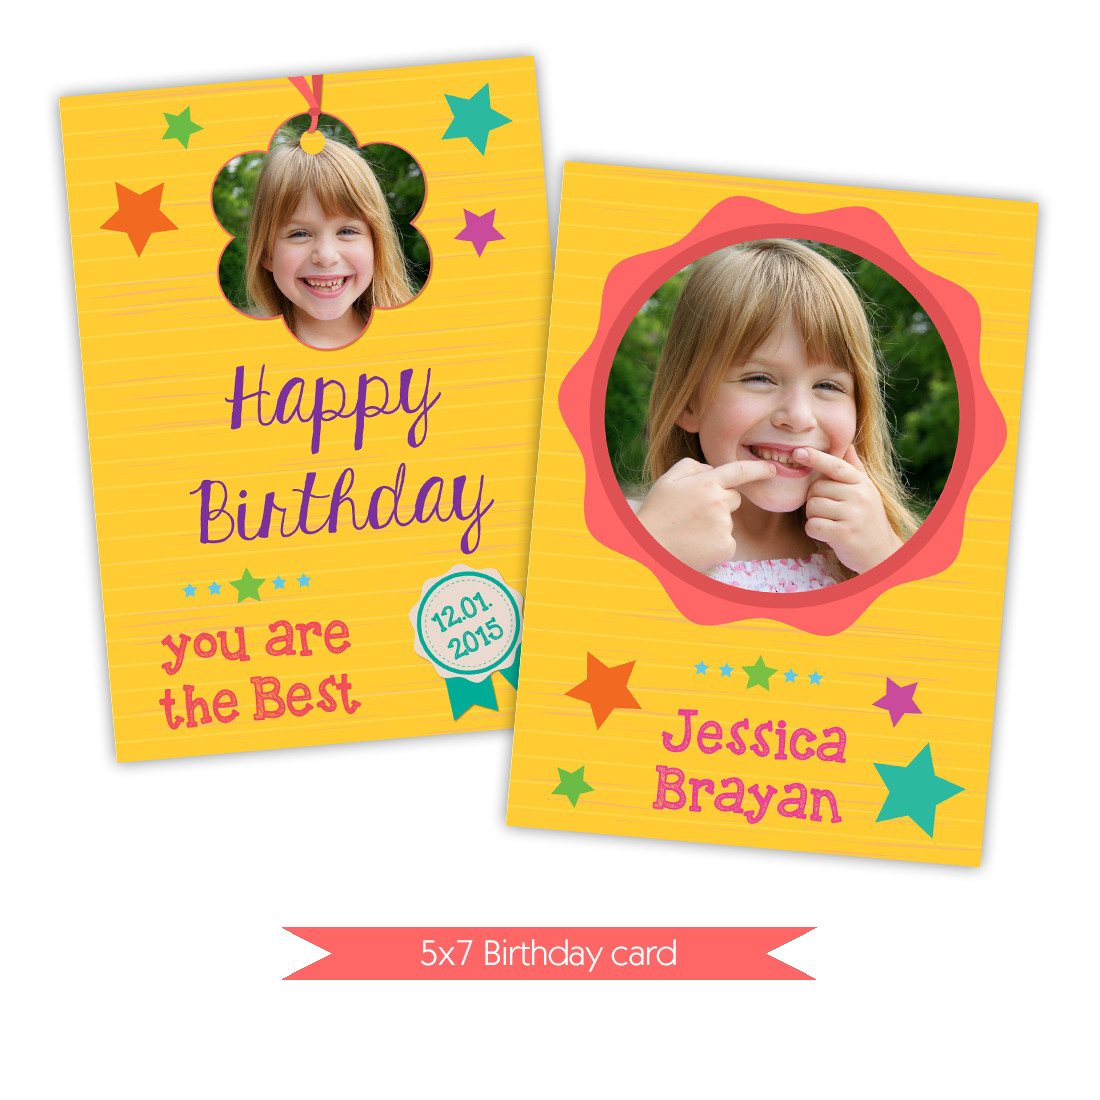 Nuwzz Happy Birthday Card shop template bright yellow